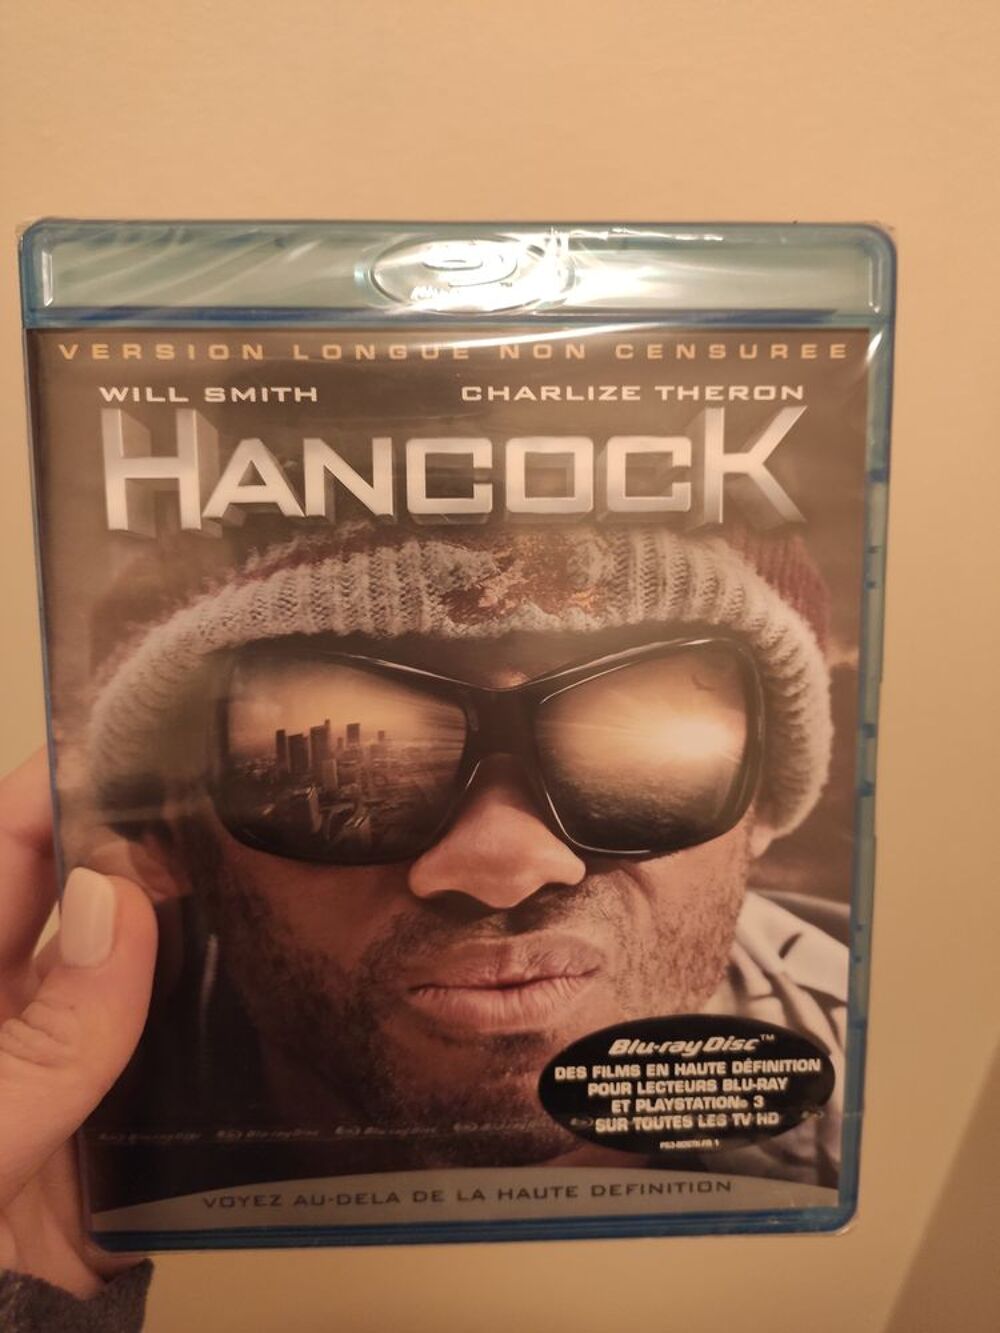 NEUF HANCOCK Blu Ray Version Non Censur&eacute;e DVD et blu-ray